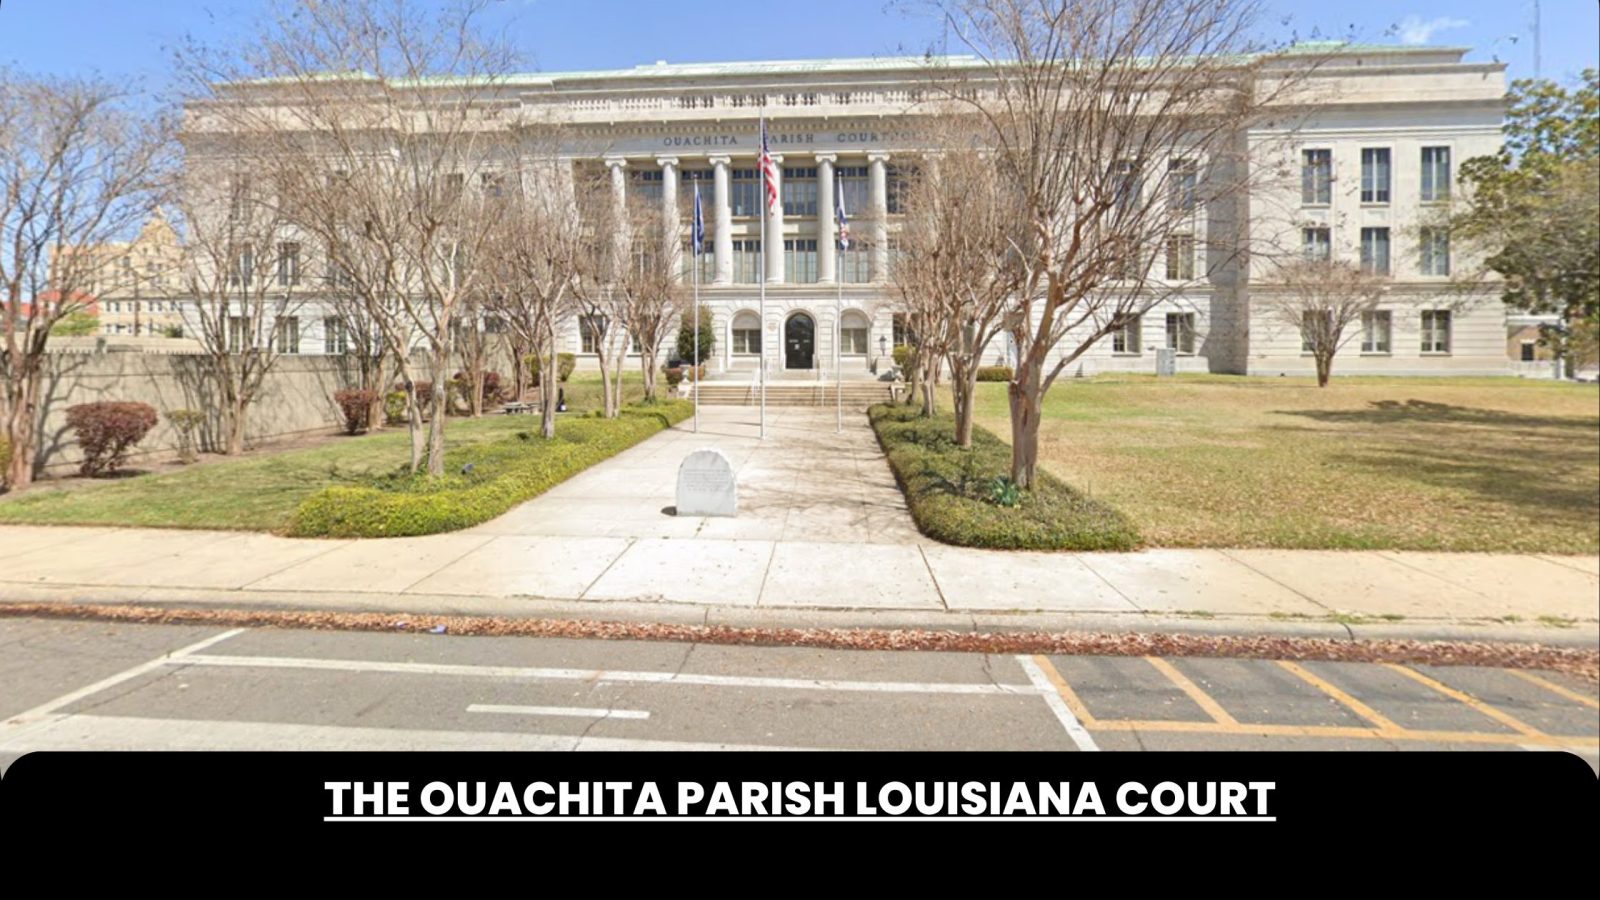 The Ouachita Parish Louisiana Court